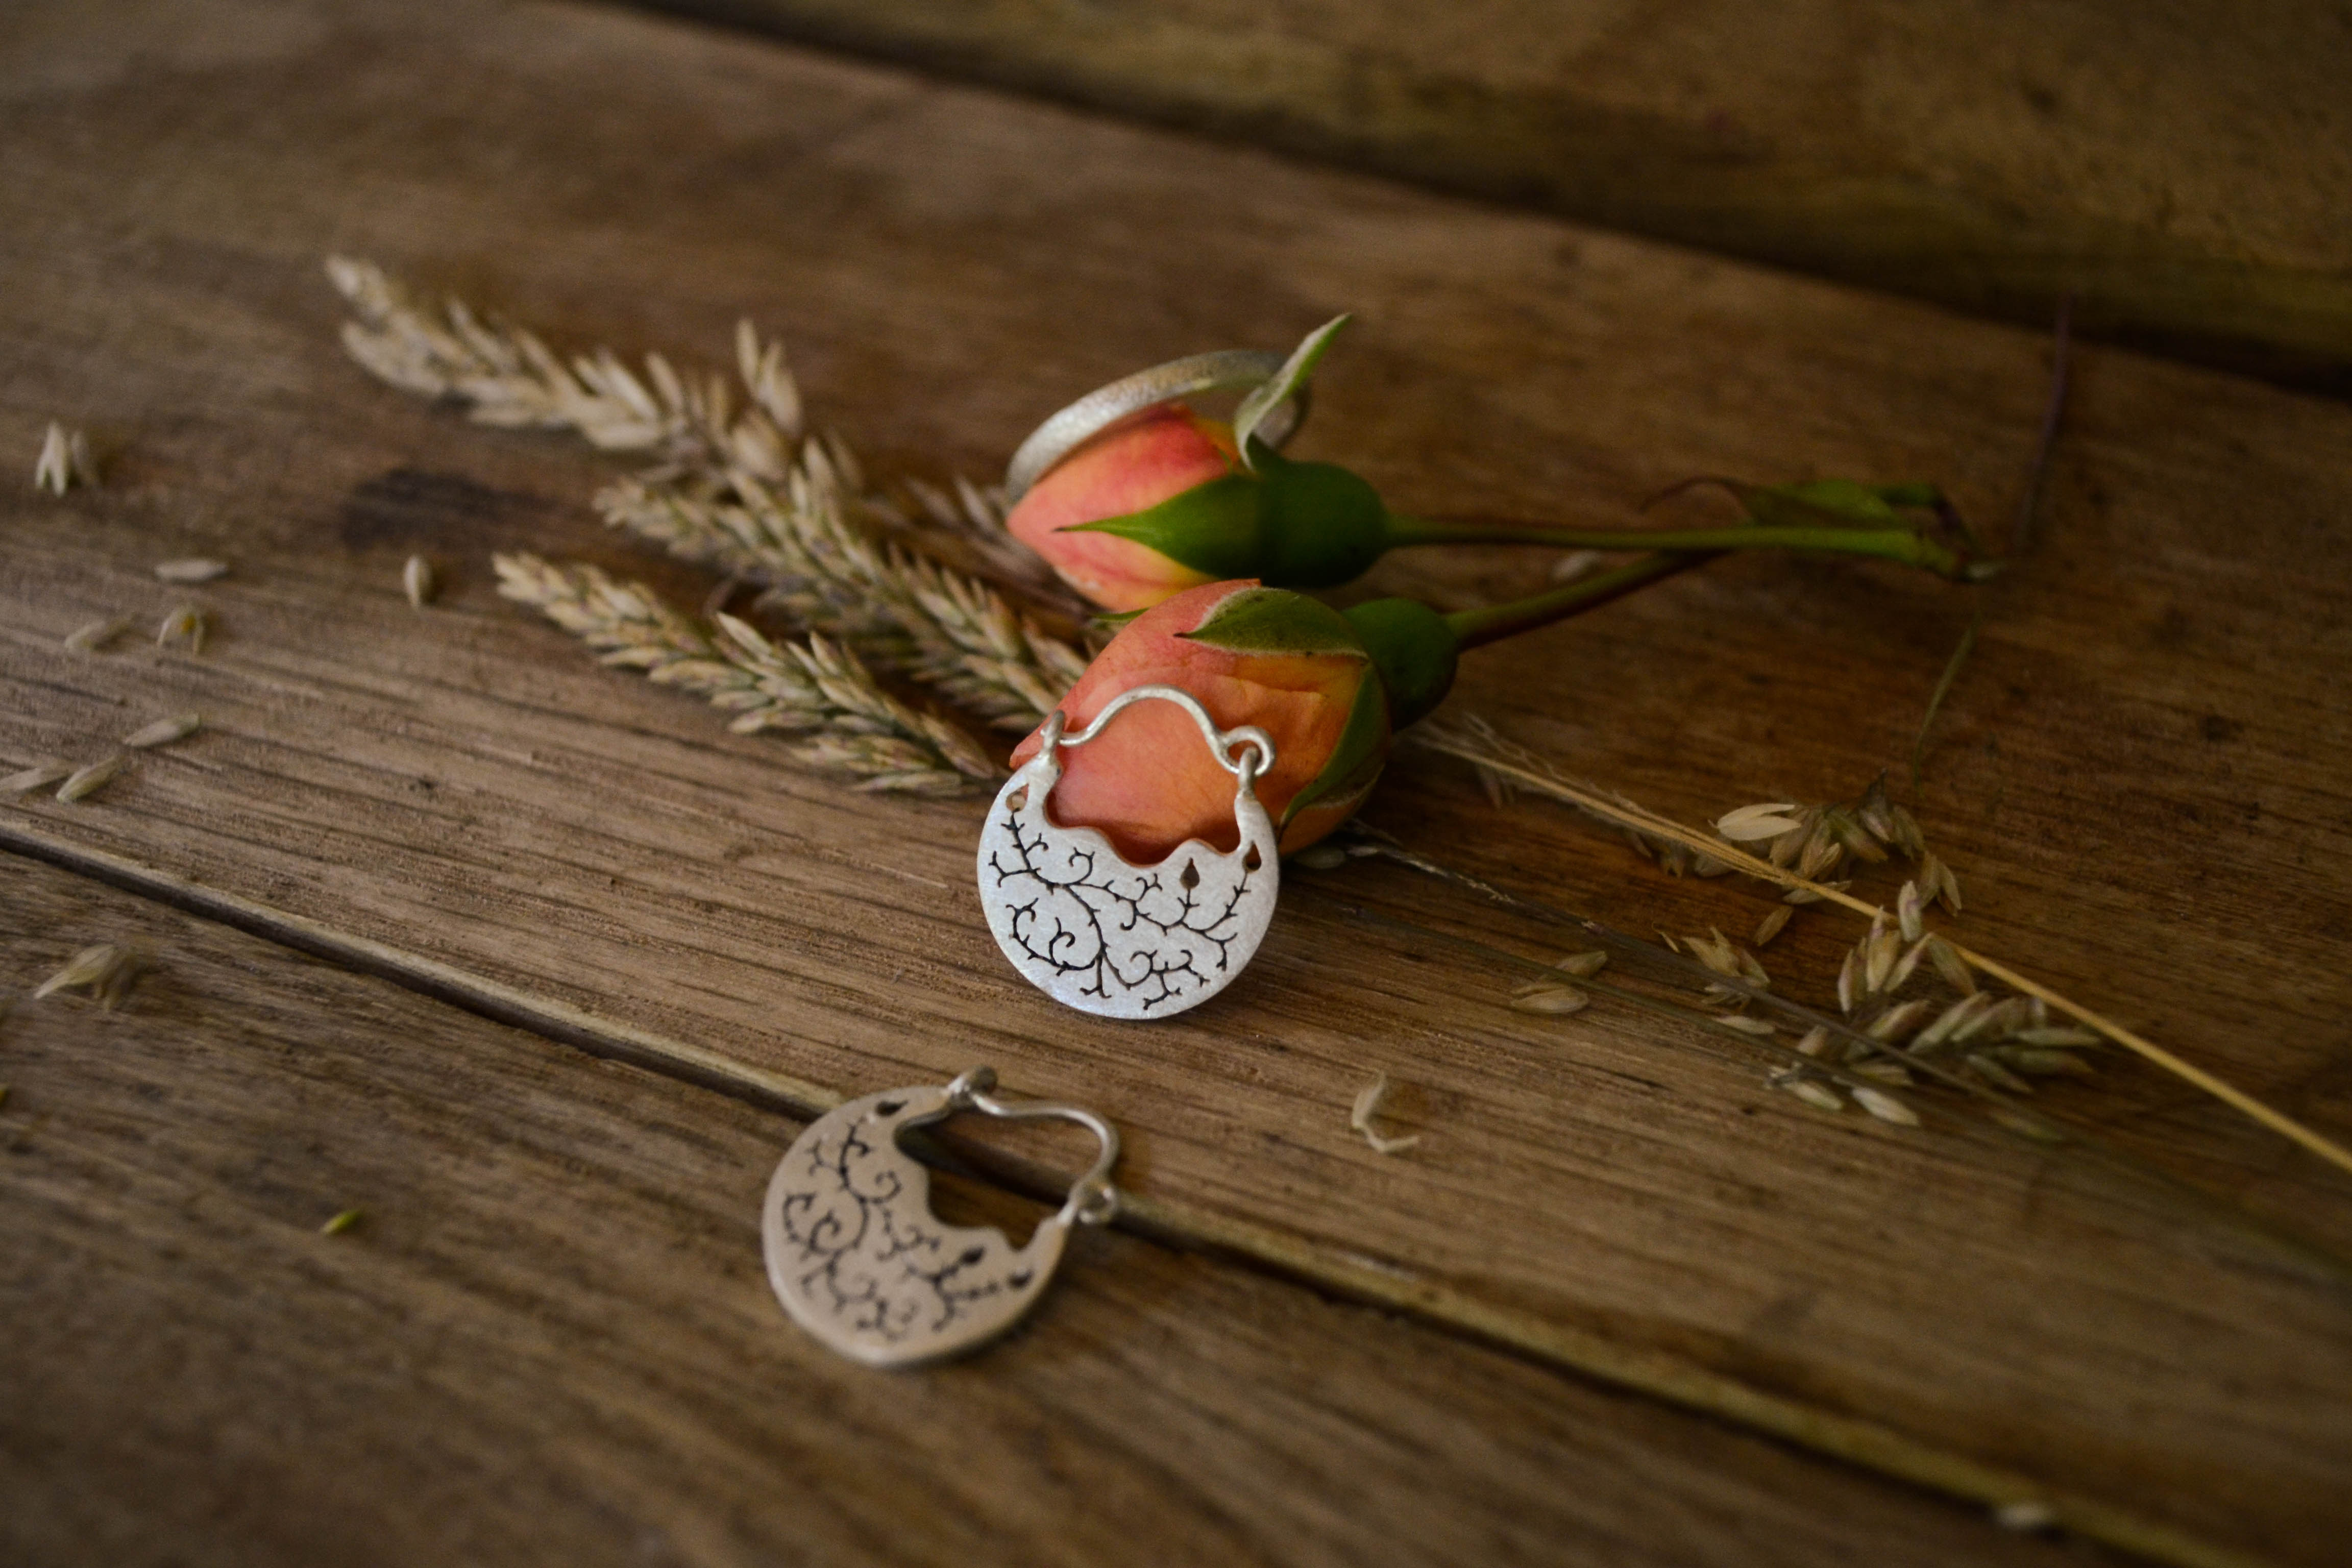 Bramble earrings and ring on oak